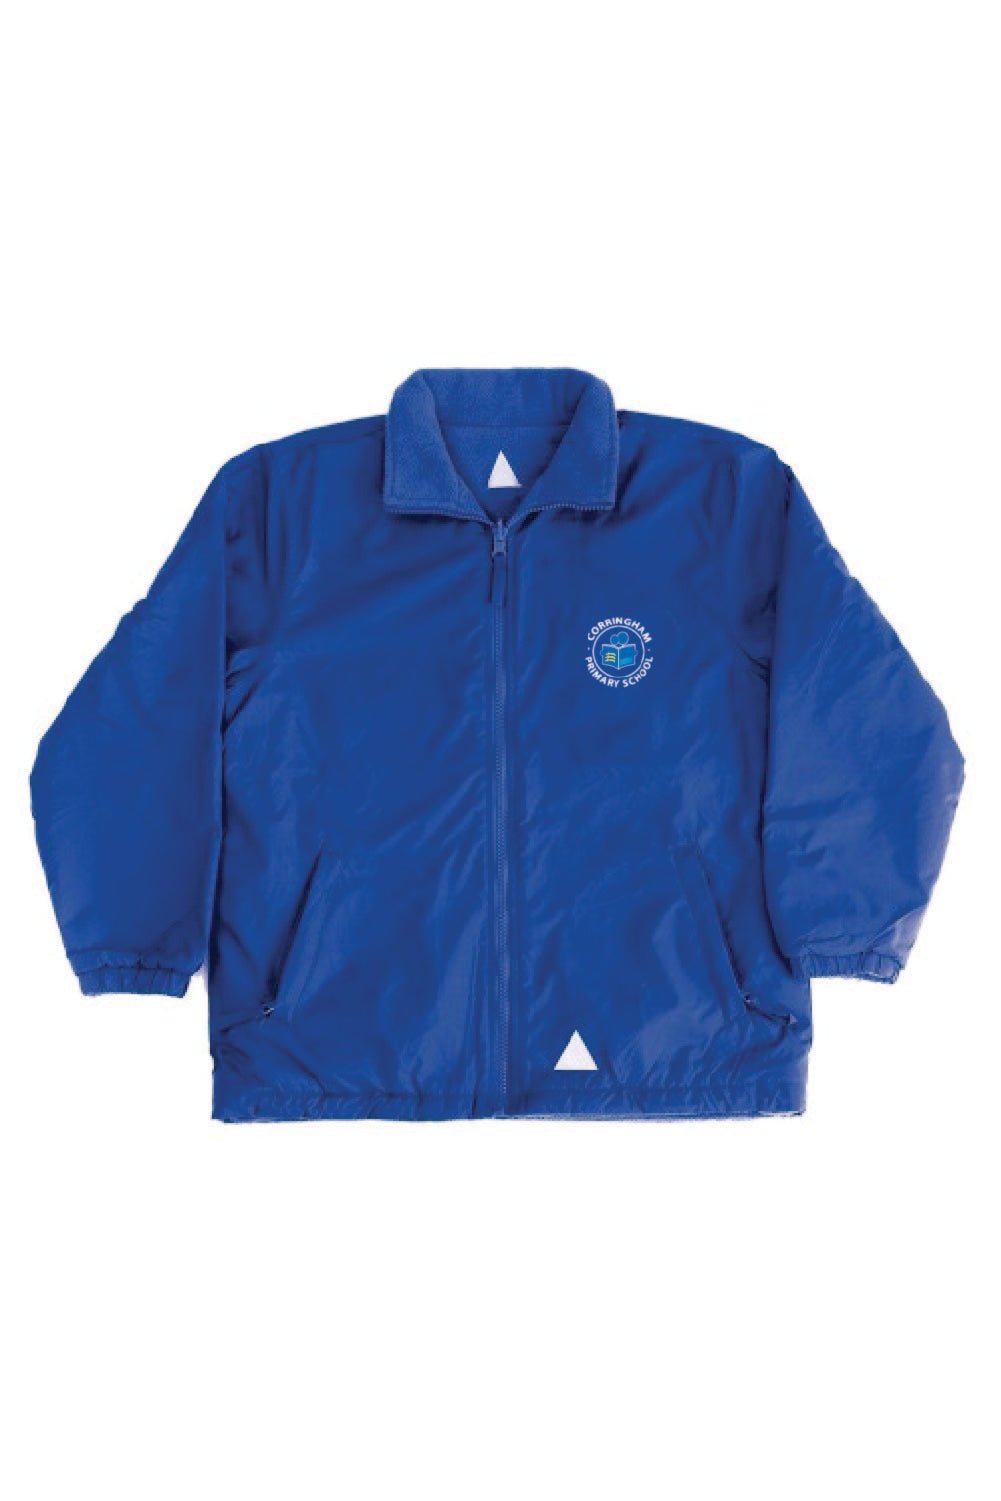 Corringham Primary Reversible School Fleece Jacket - Uniformwise Schoolwear